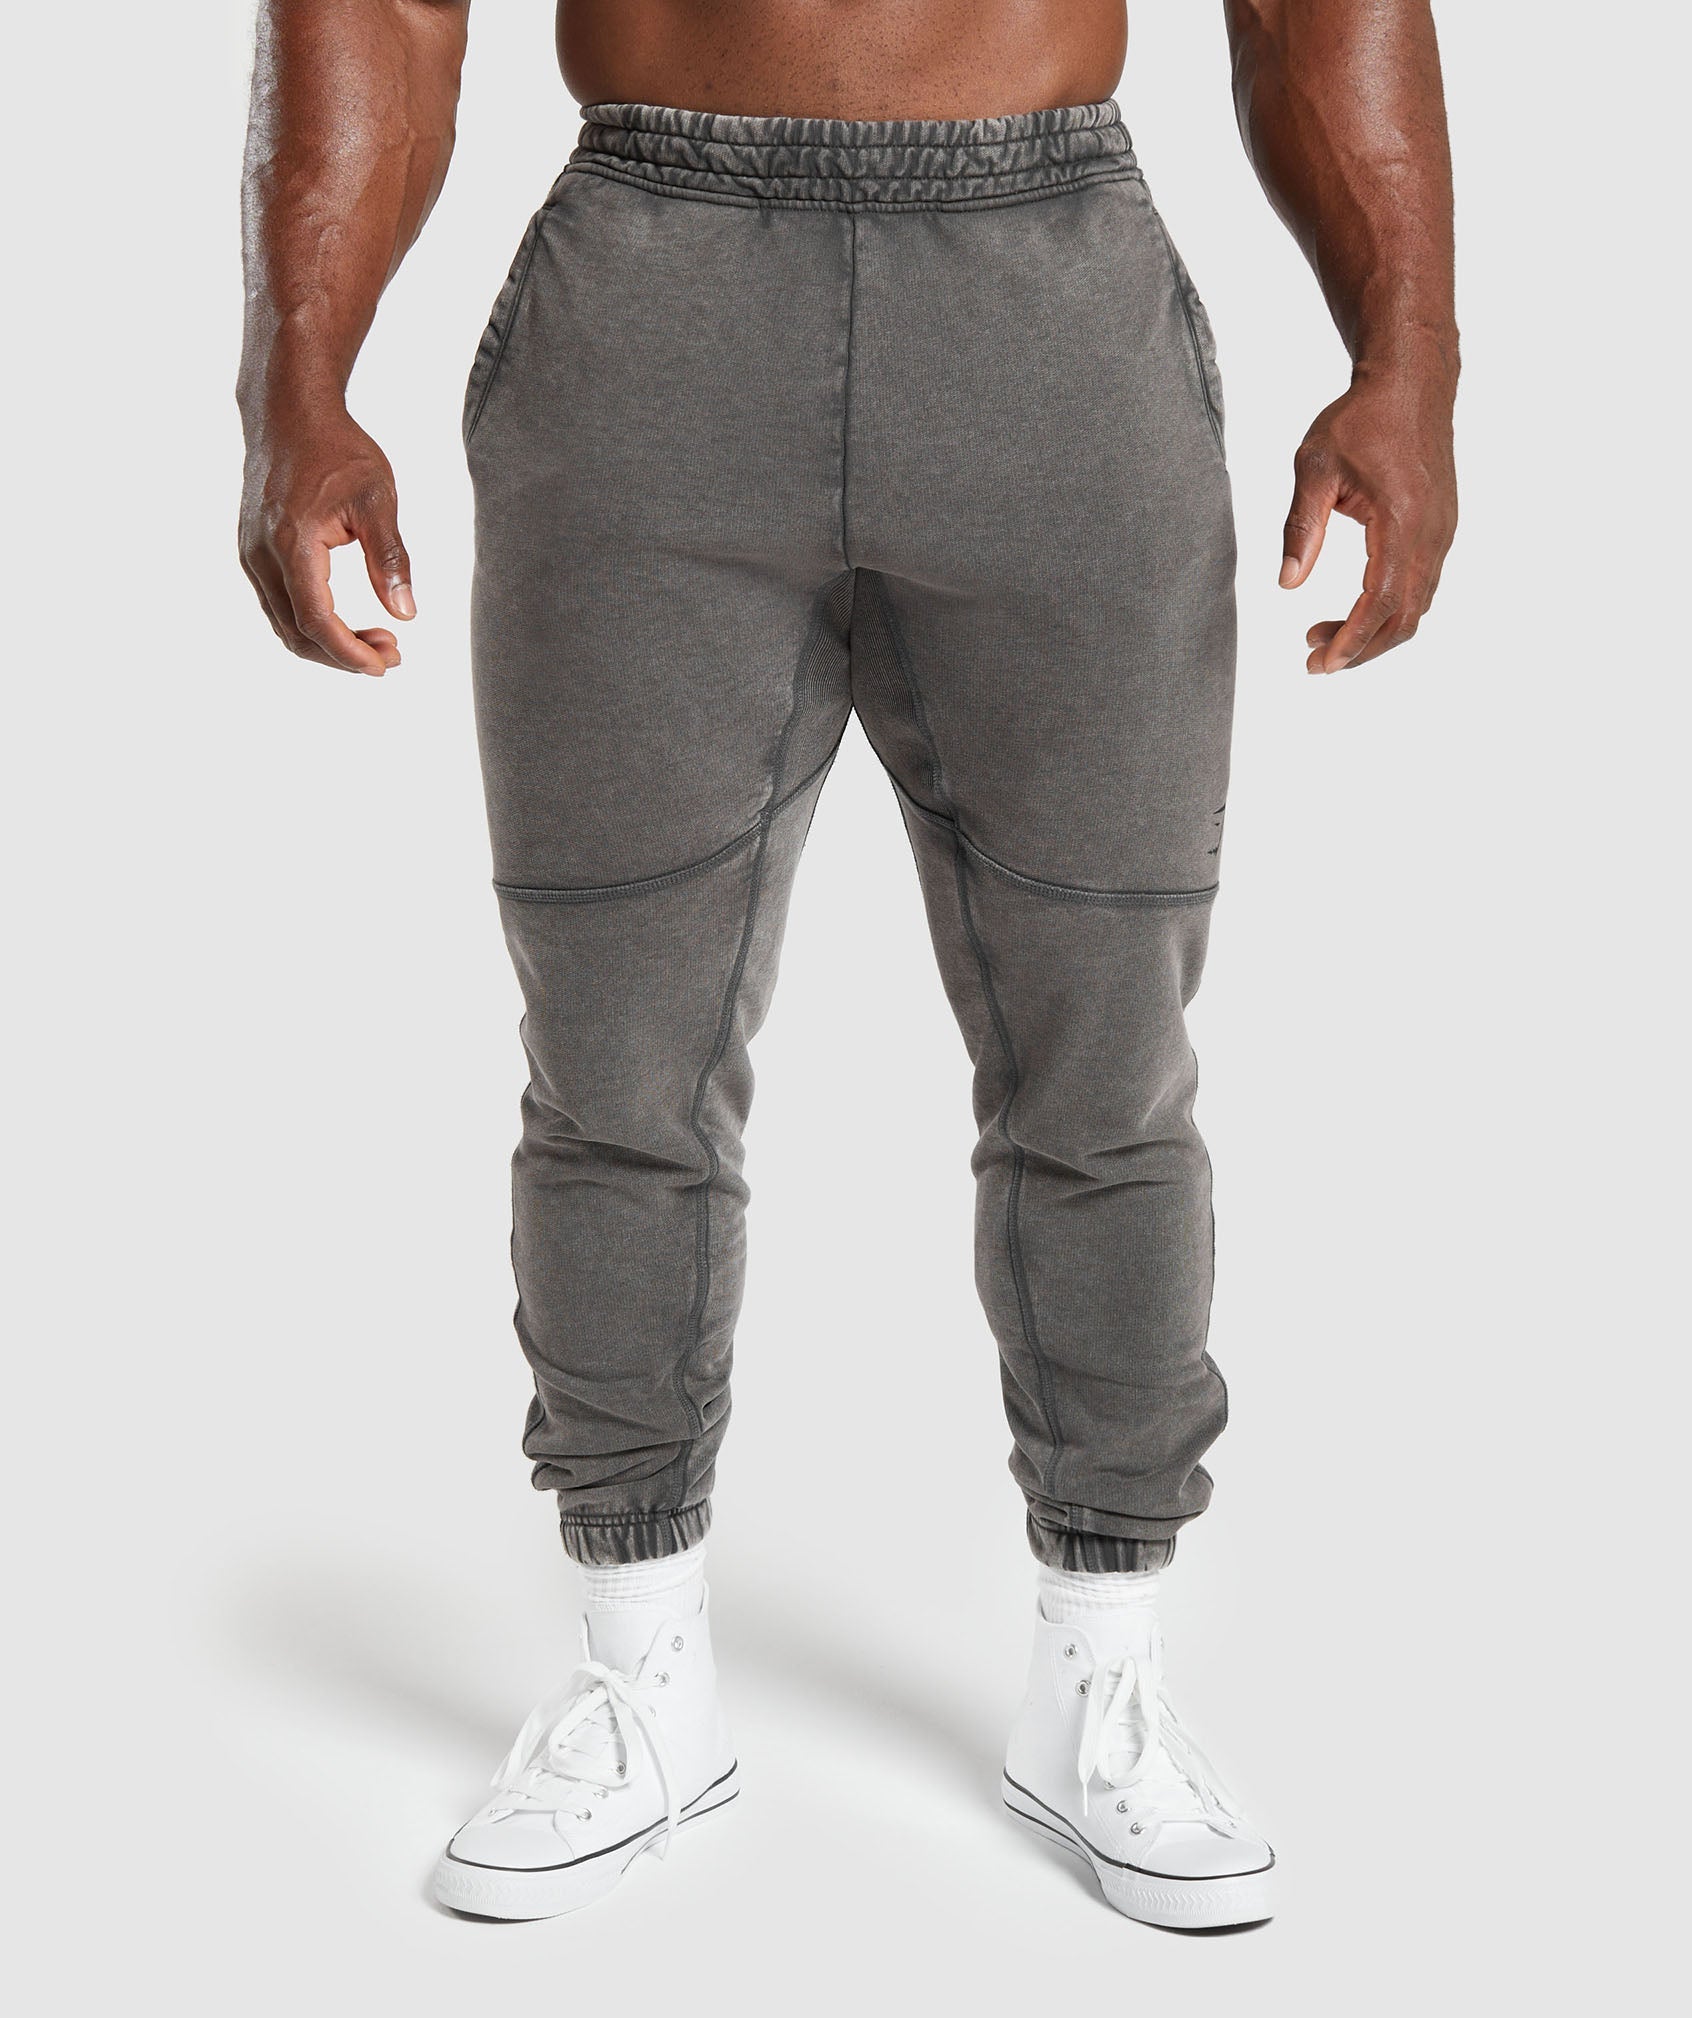 Gymshark, Pants, Mens Gymshark Black Sweatpants Size Medium